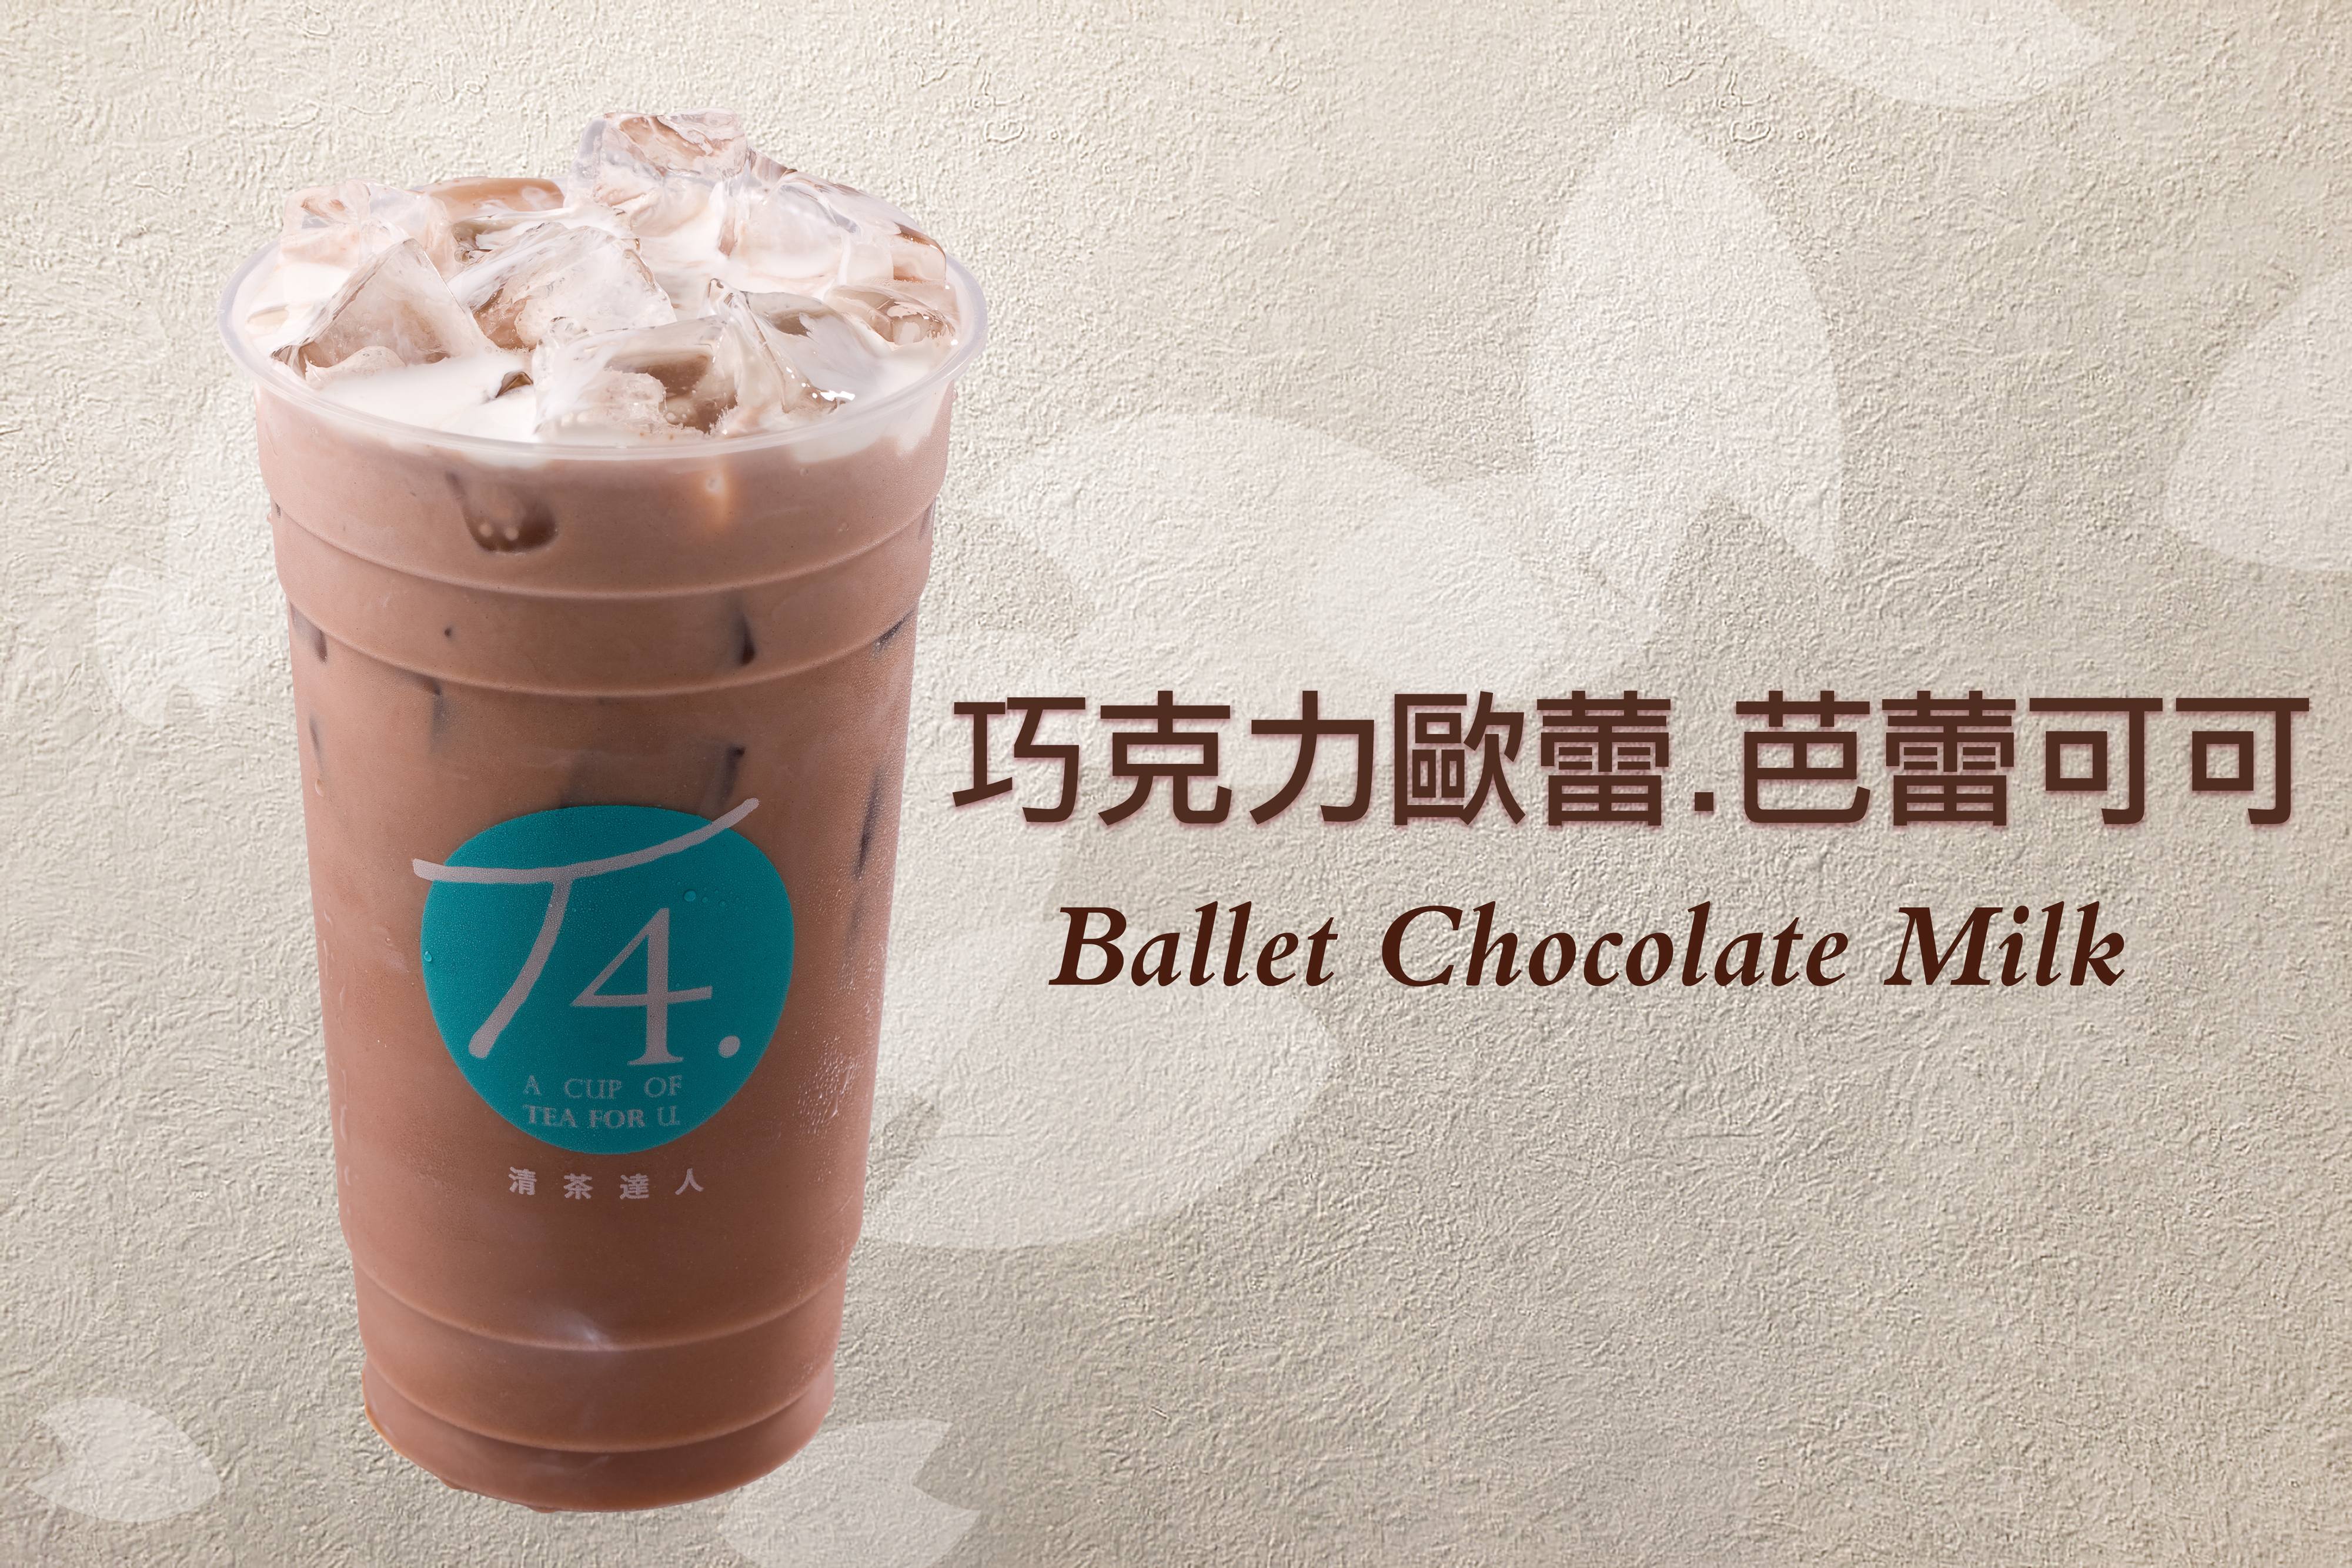 Ballet Chocolate